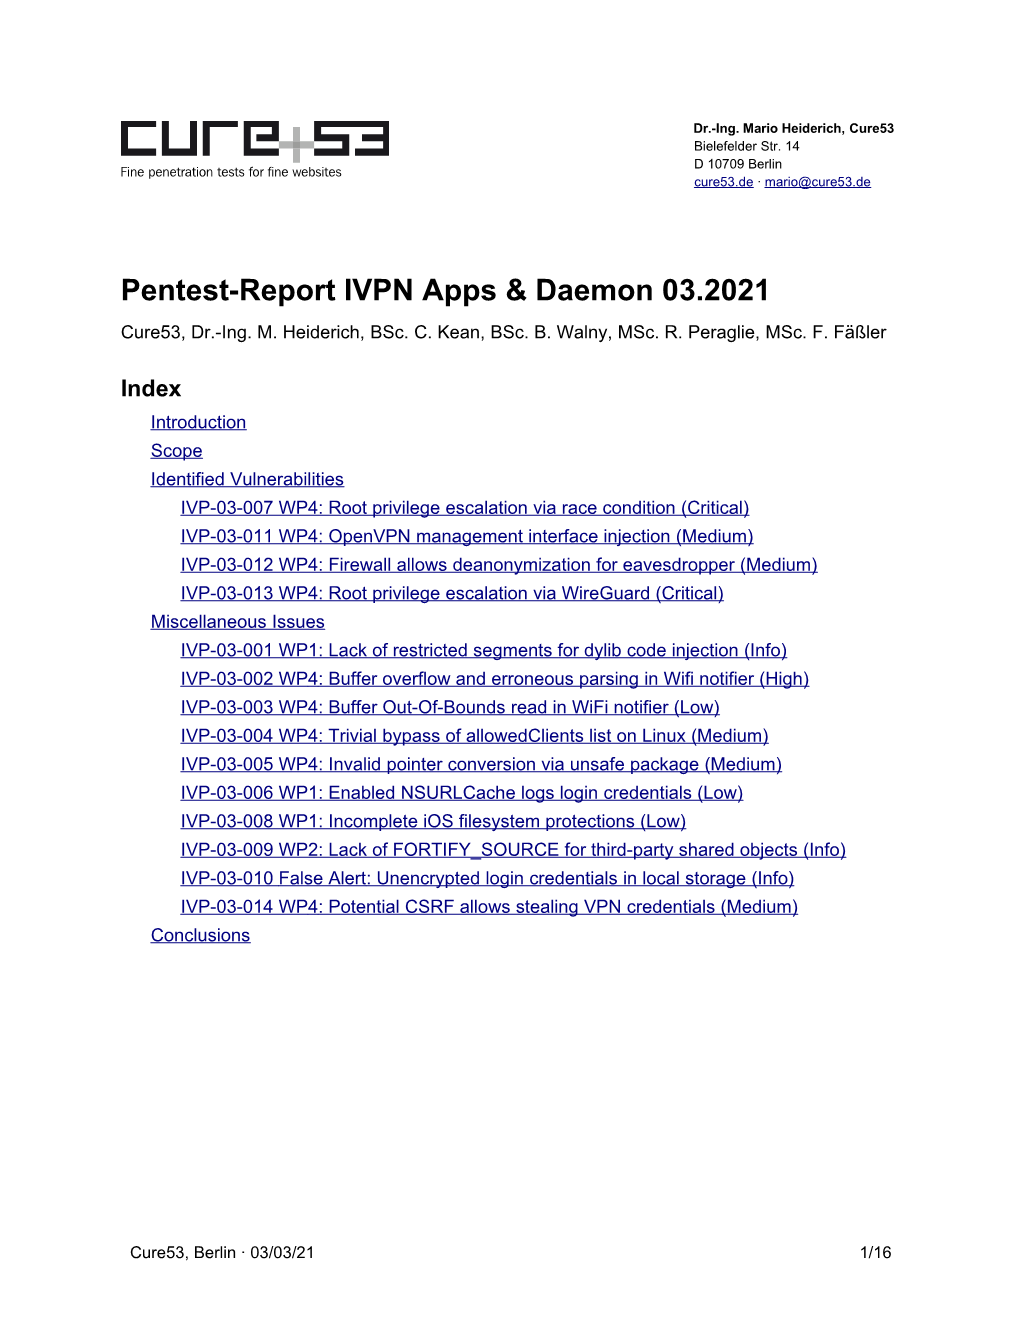 Pentest-Report IVPN Apps & Daemon 03.2021